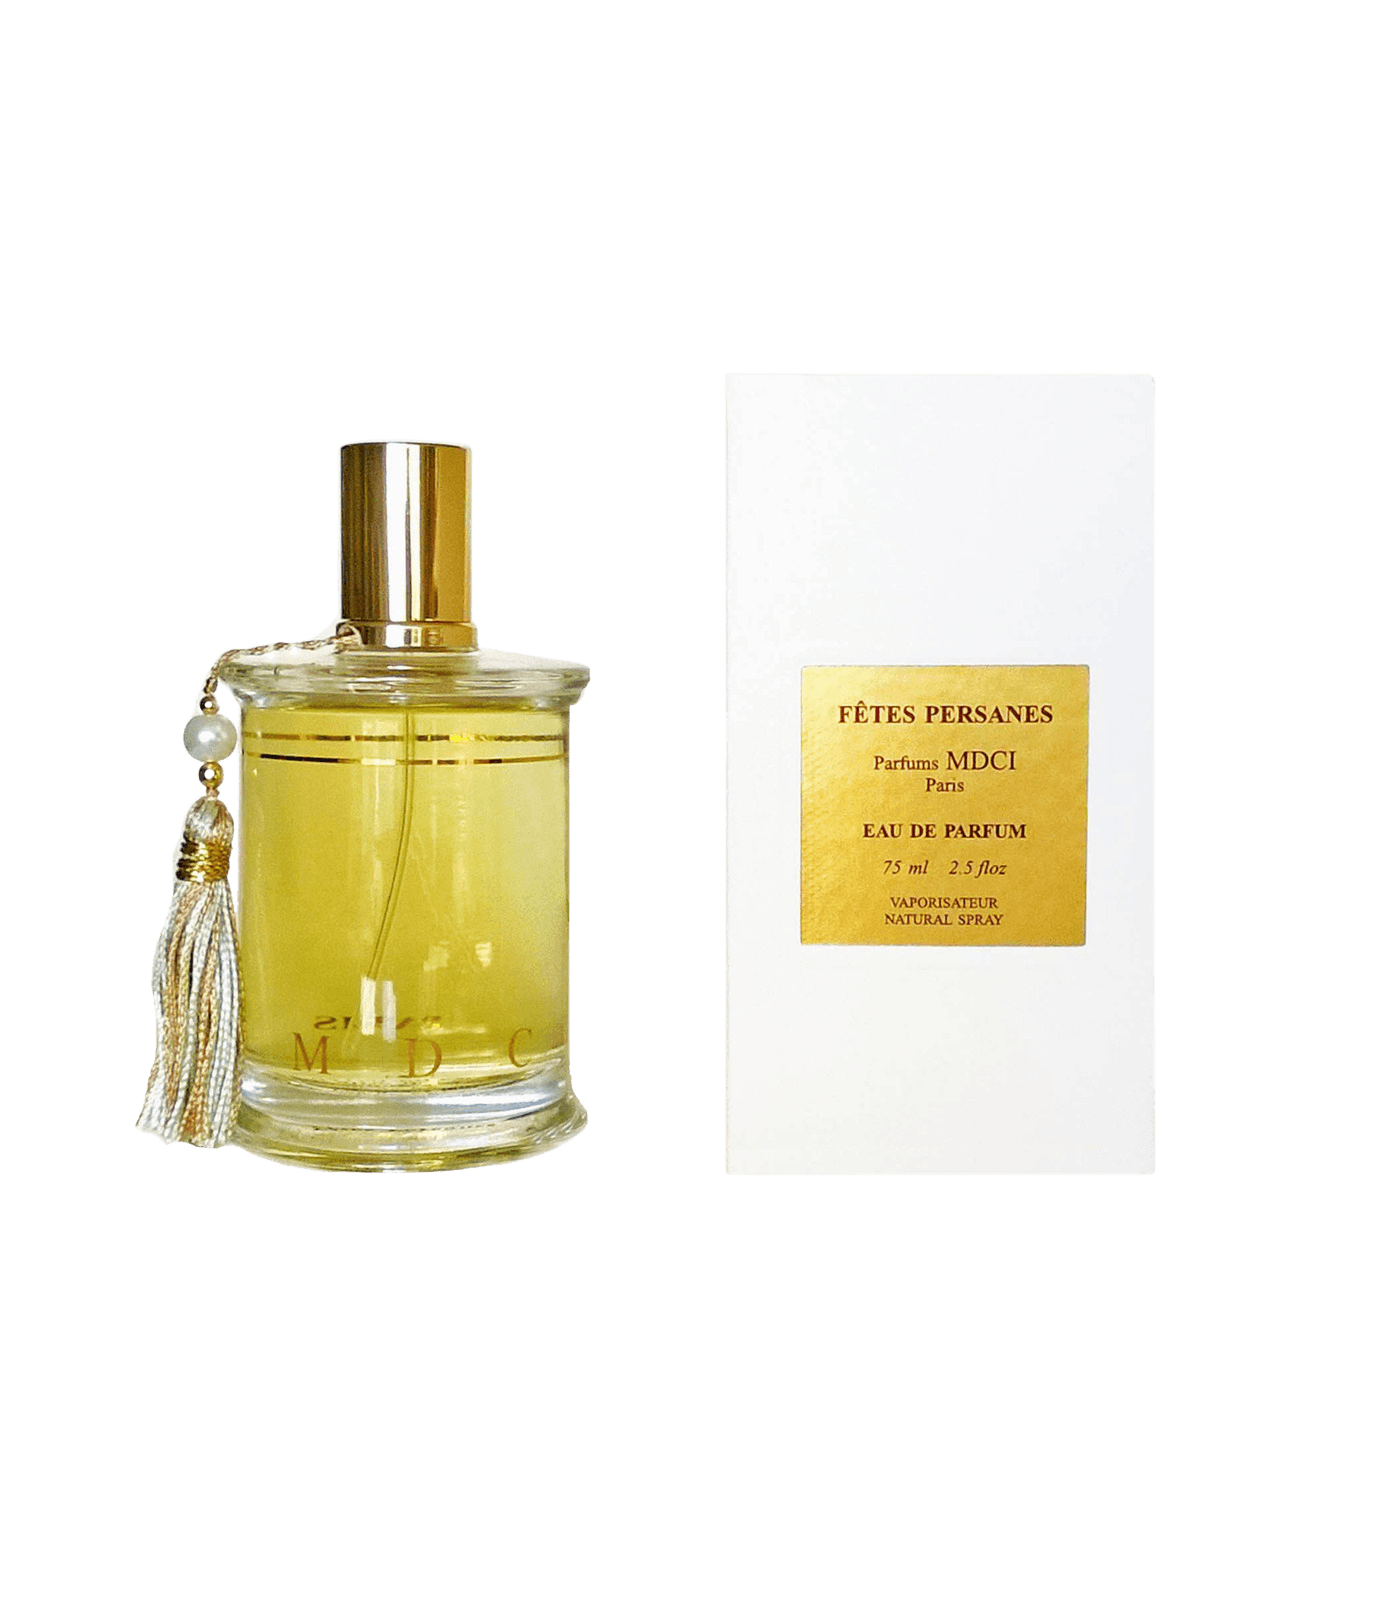 Parfum MDCI Fetes Persanes perfume + package | Perfume Lounge